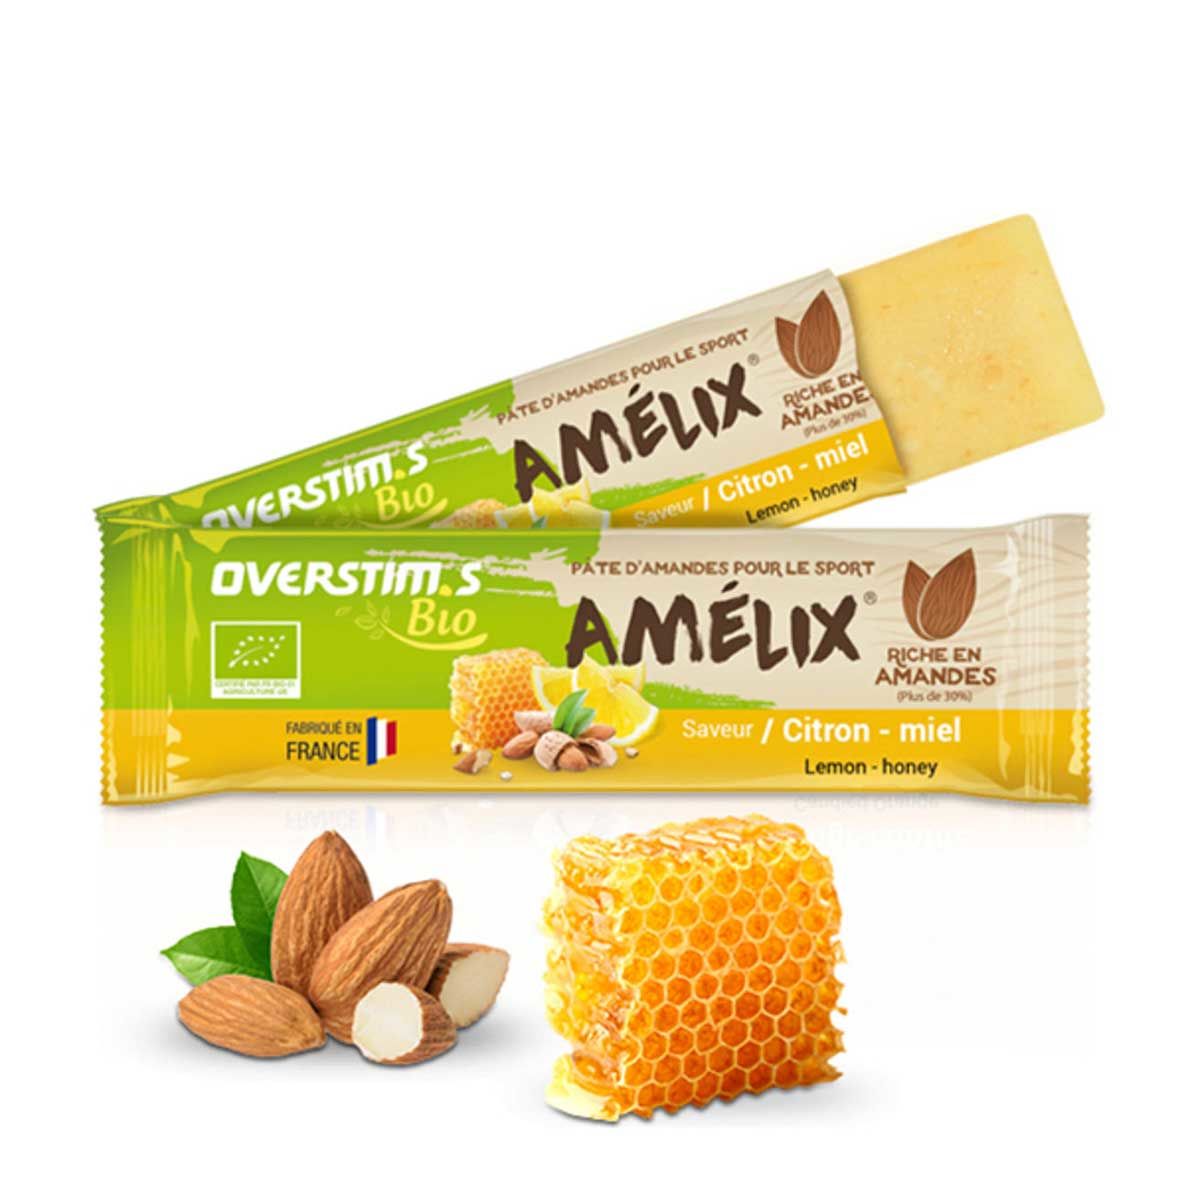 Overstim.s organic Amelix energy bar - Lemon, honey